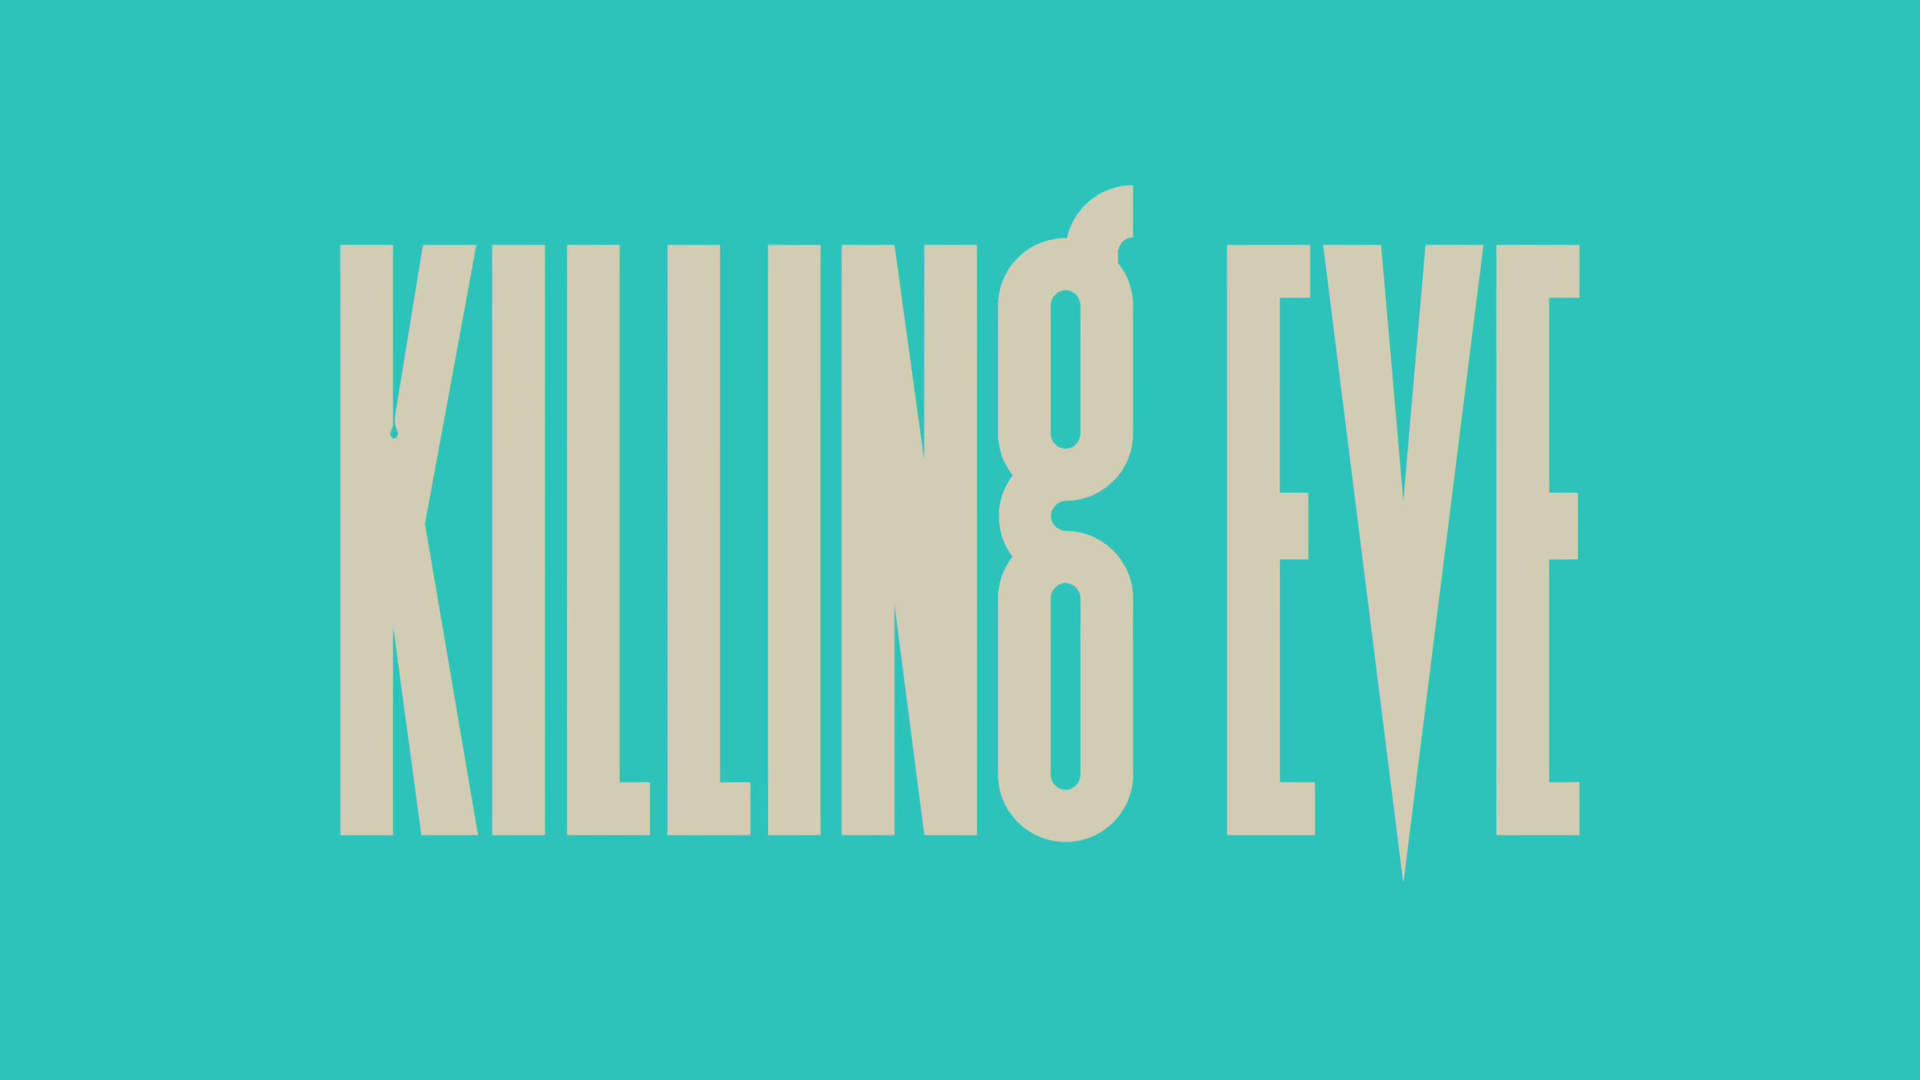 Killing Eve Turquoise Poster Background